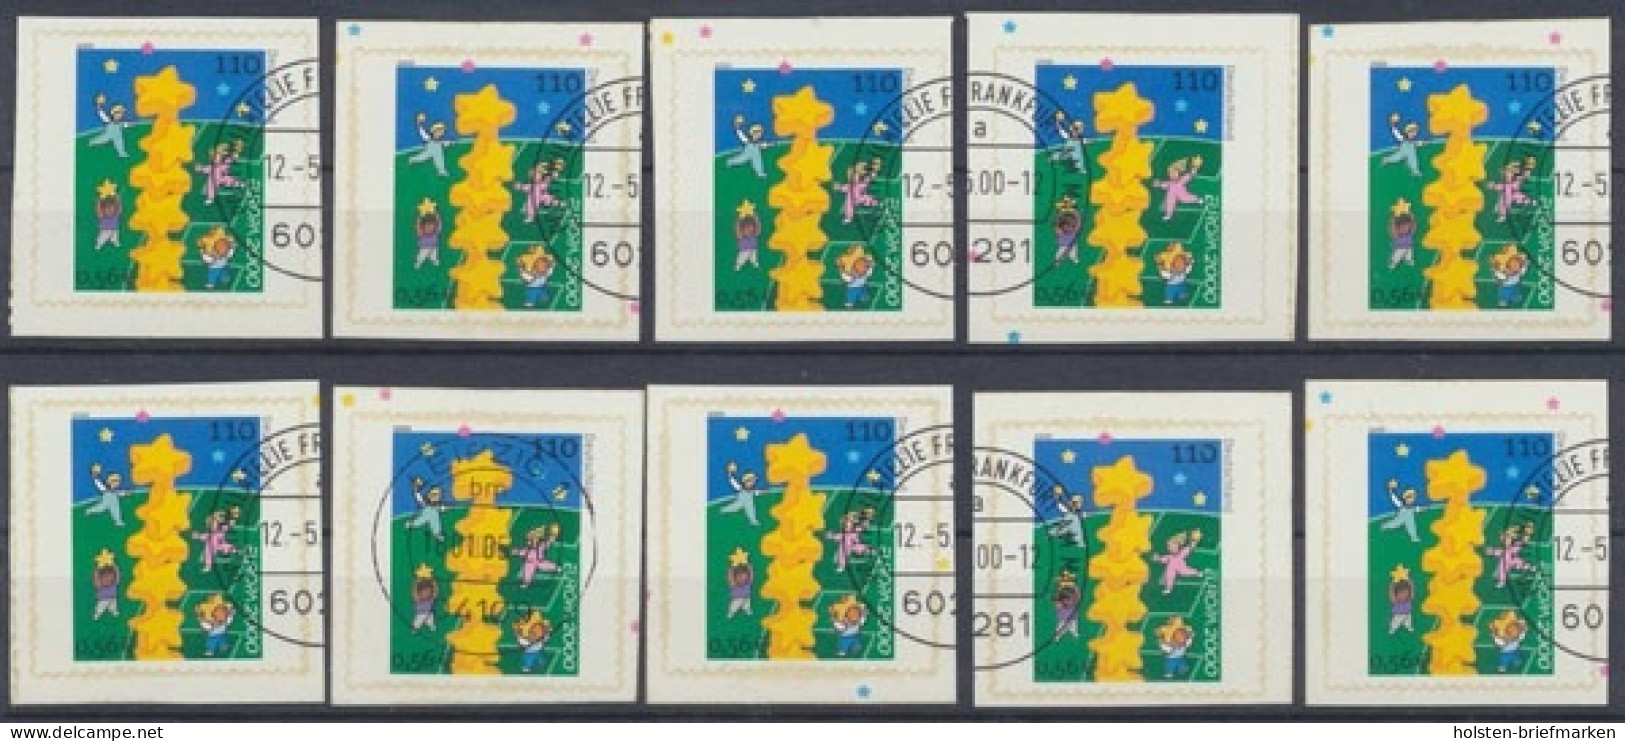 Deutschland (BRD), Michel Nr. 2114 Sk (10), Gestempelt - Used Stamps